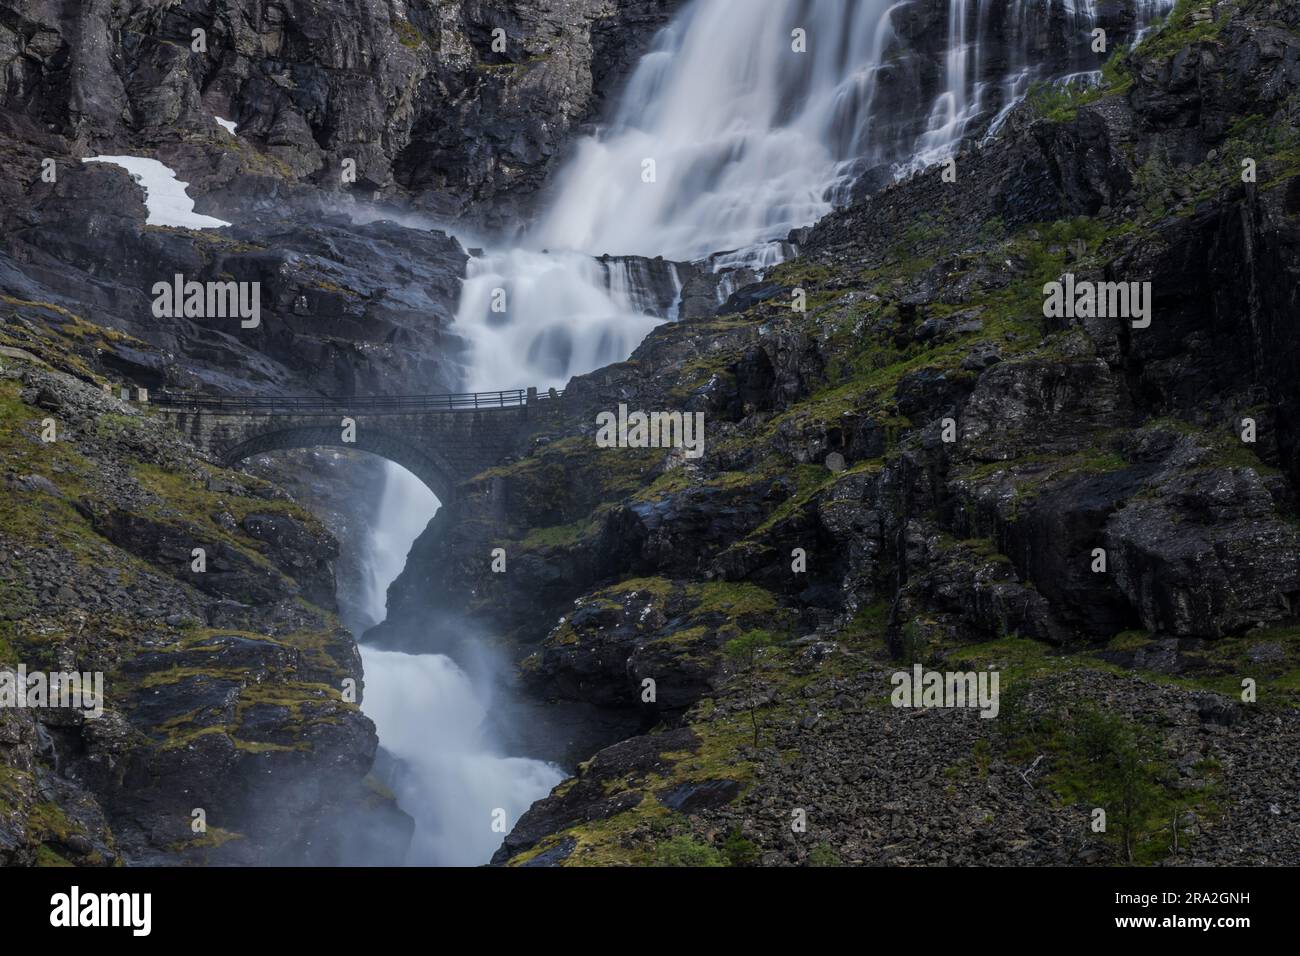 Trollstigen Road In Norway With Stone Bridge Waterfall And Dramatic Cliffs. Scenic Norwegian Destinations. Stock Photo